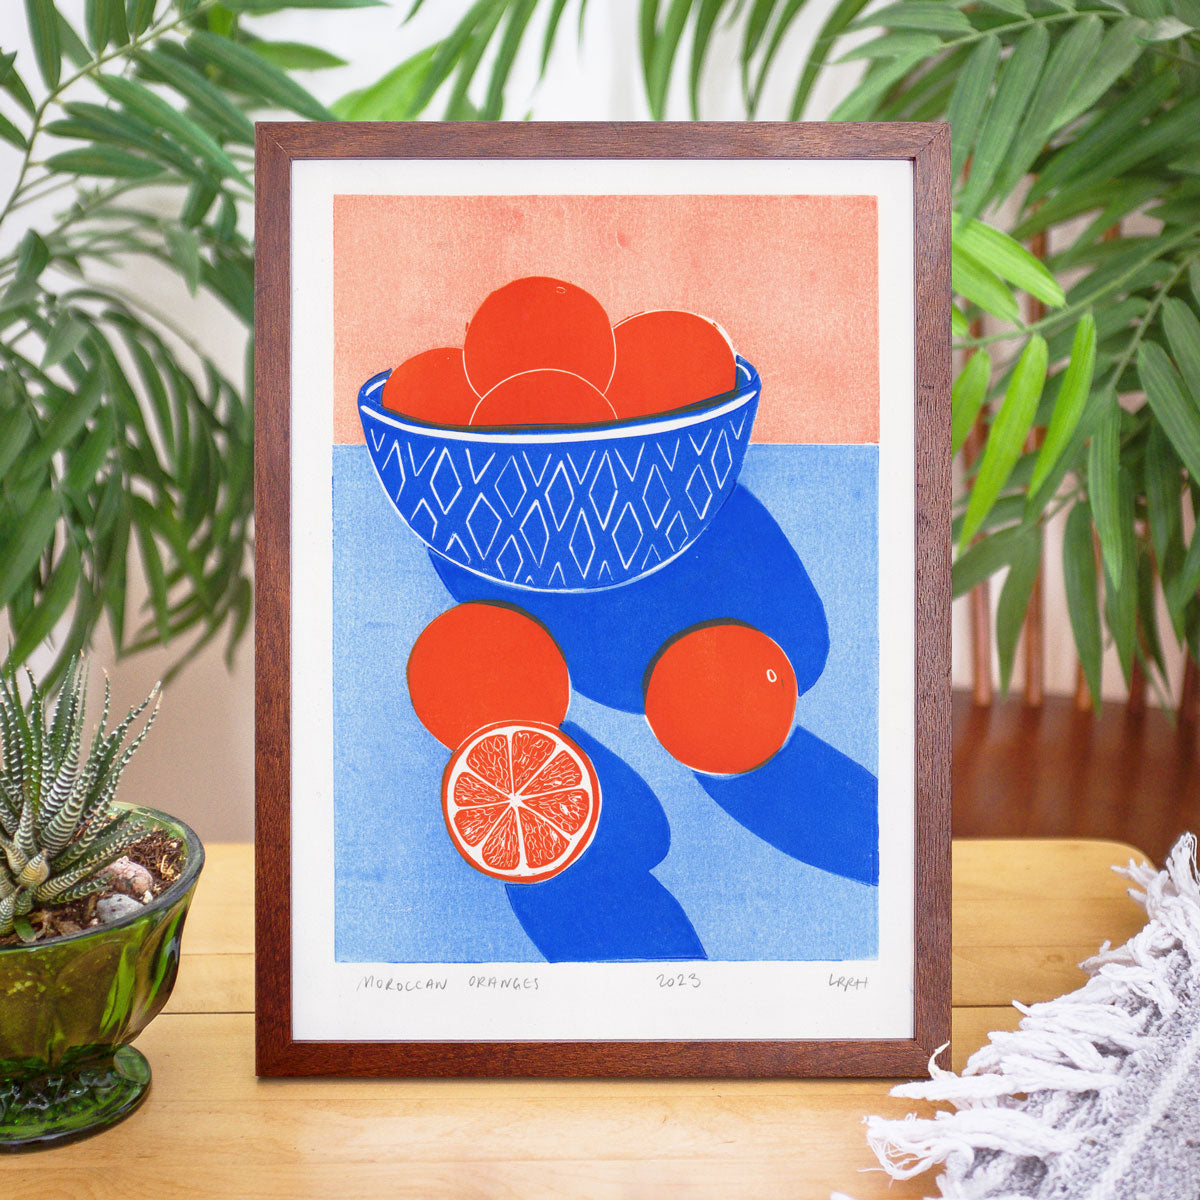 Moroccan Oranges - Original Linocut Print